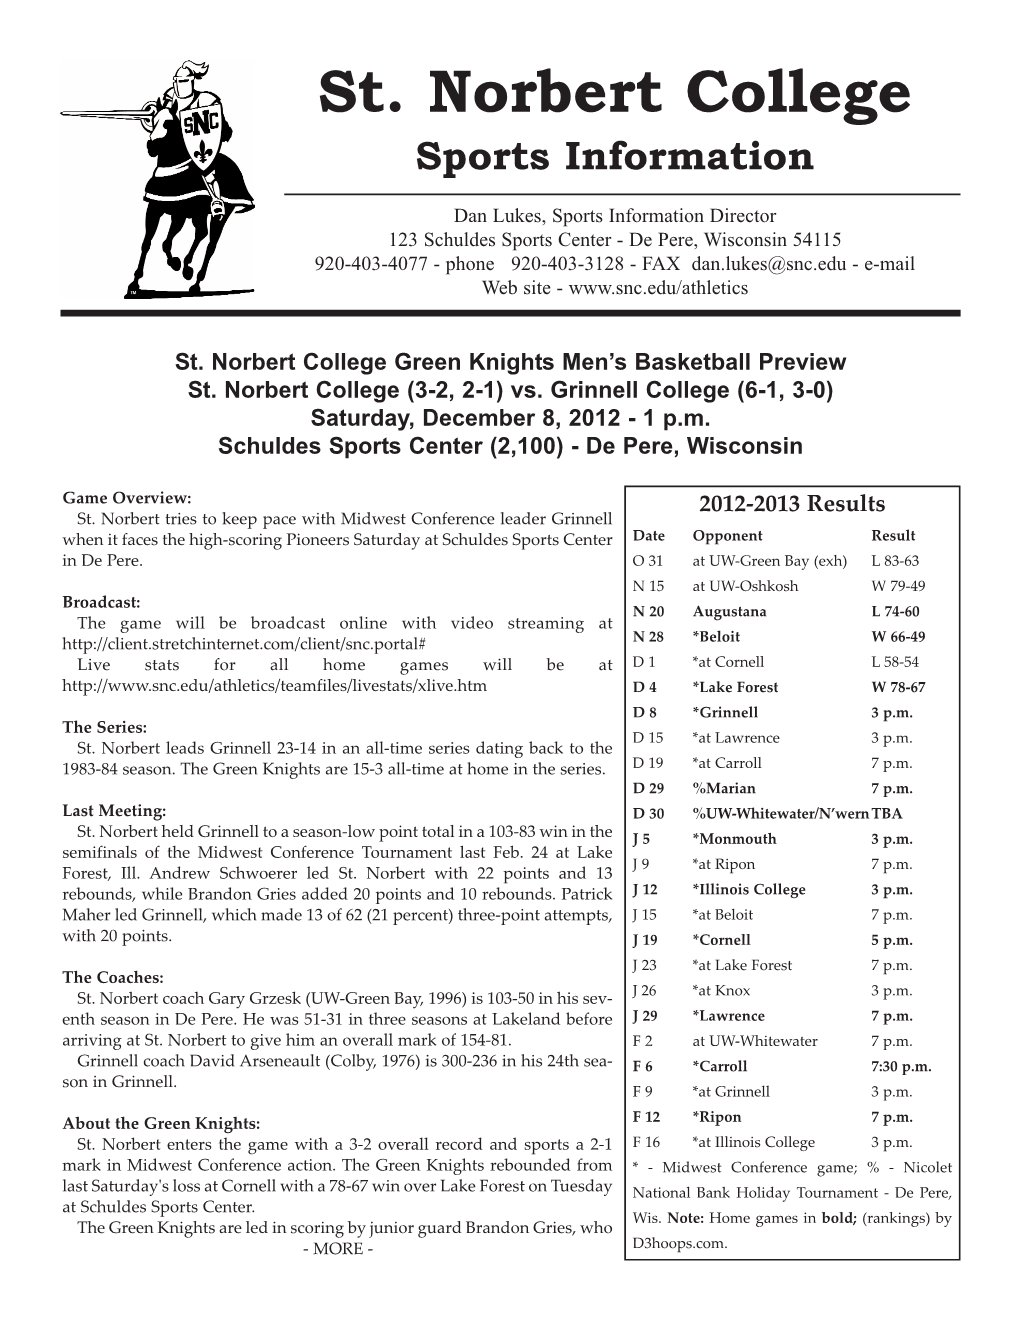 St. Norbert College Sports Information